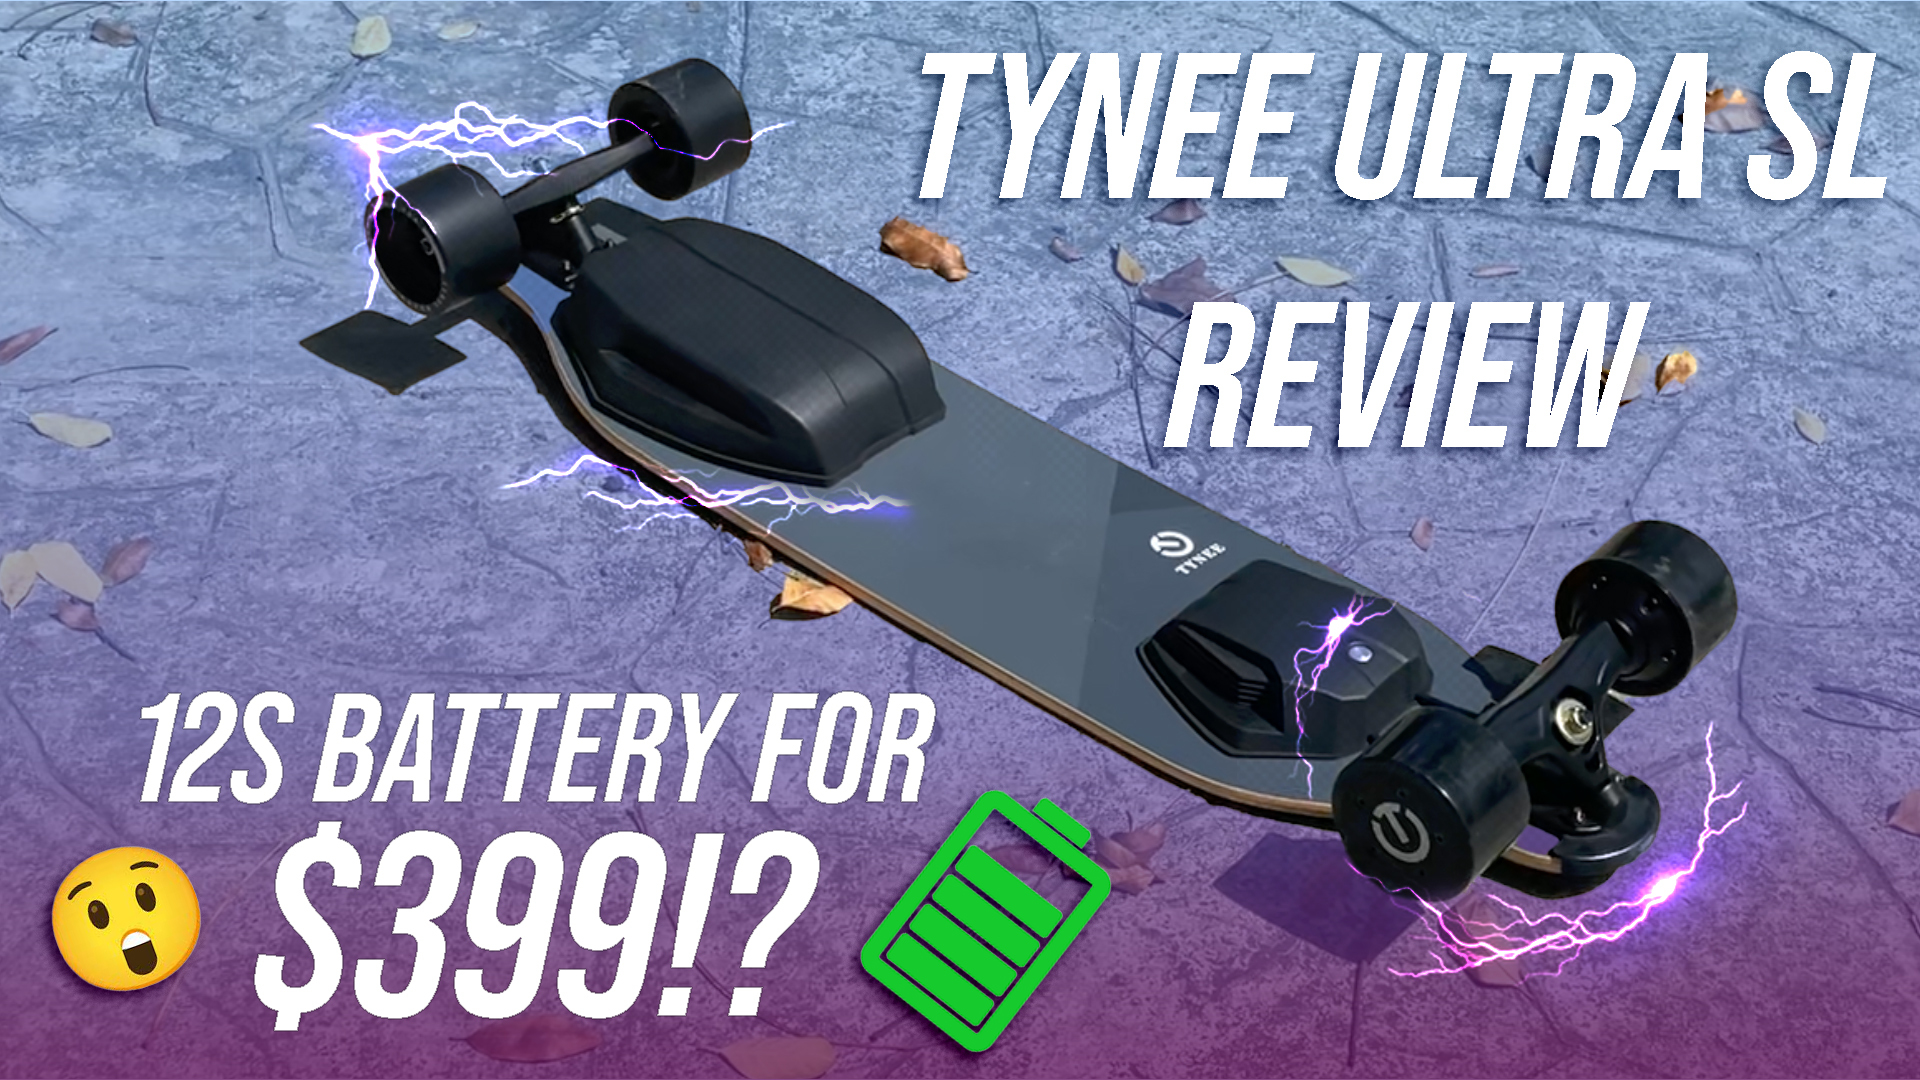 Tynee Ultra SL Hub Review – The best $400 eskate, period.